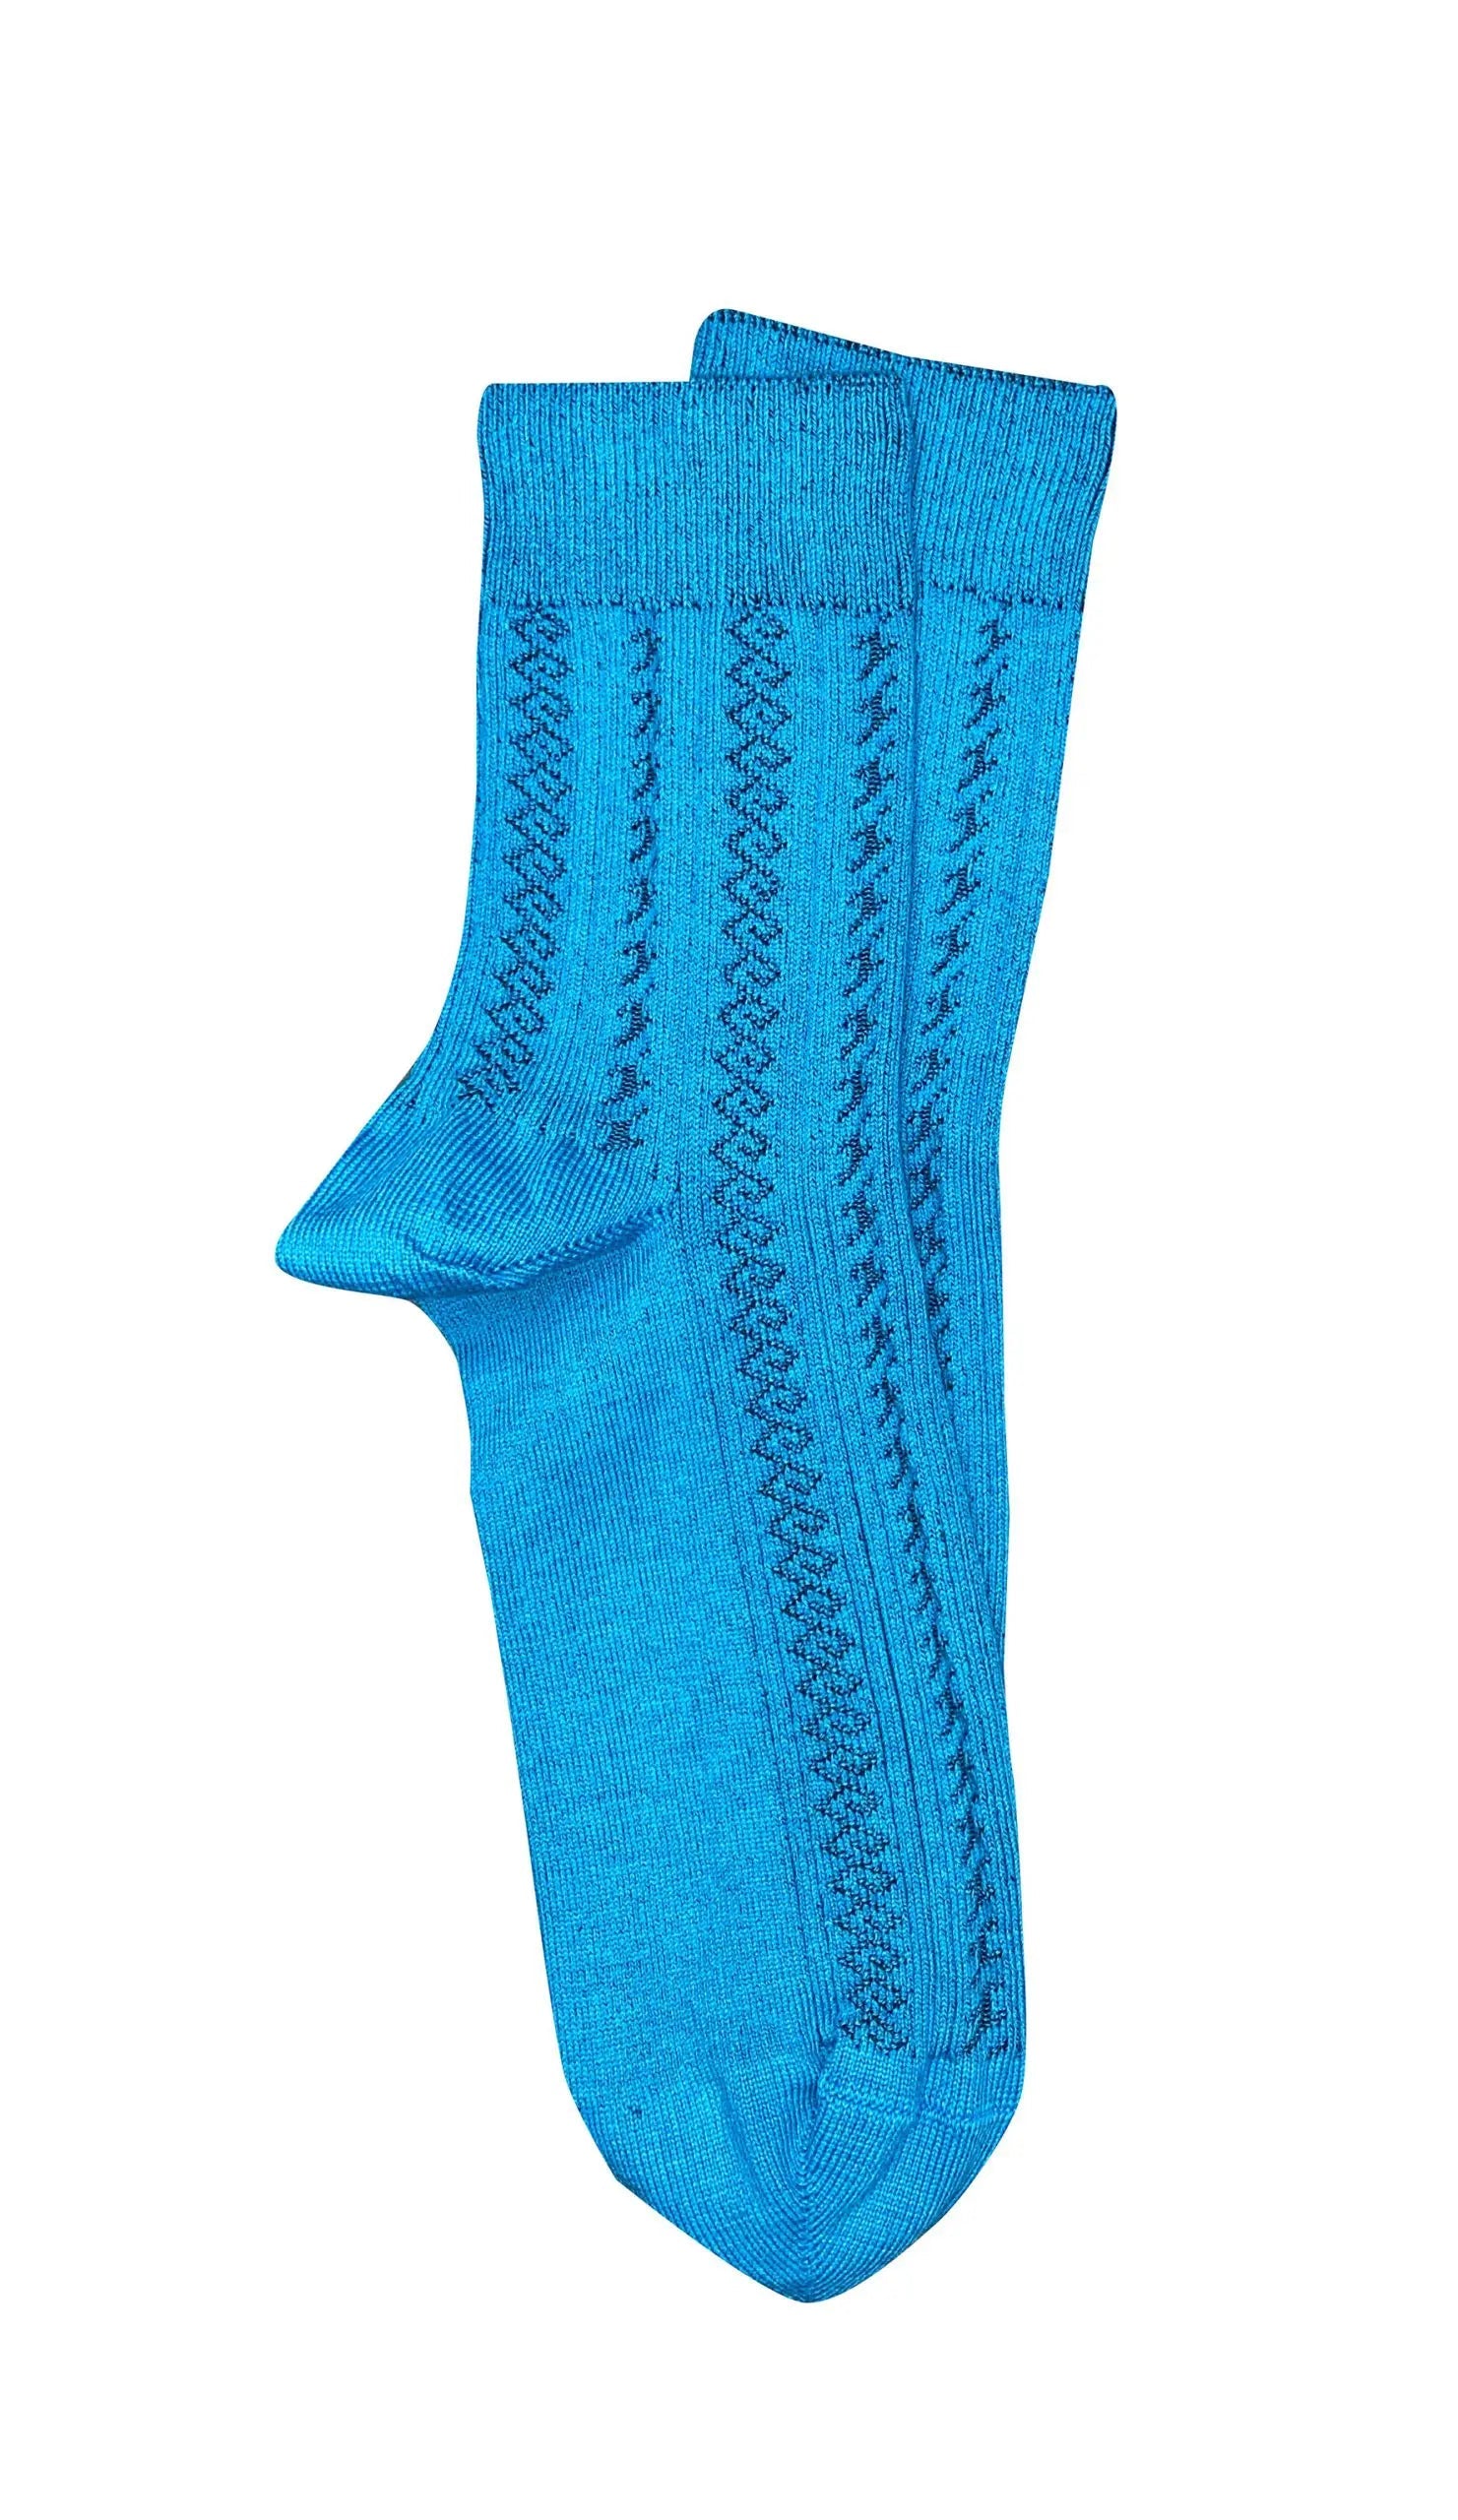 Cotton Aussie Made Socks (One Size) - Tightology socks Tightology Aqua Short Monte